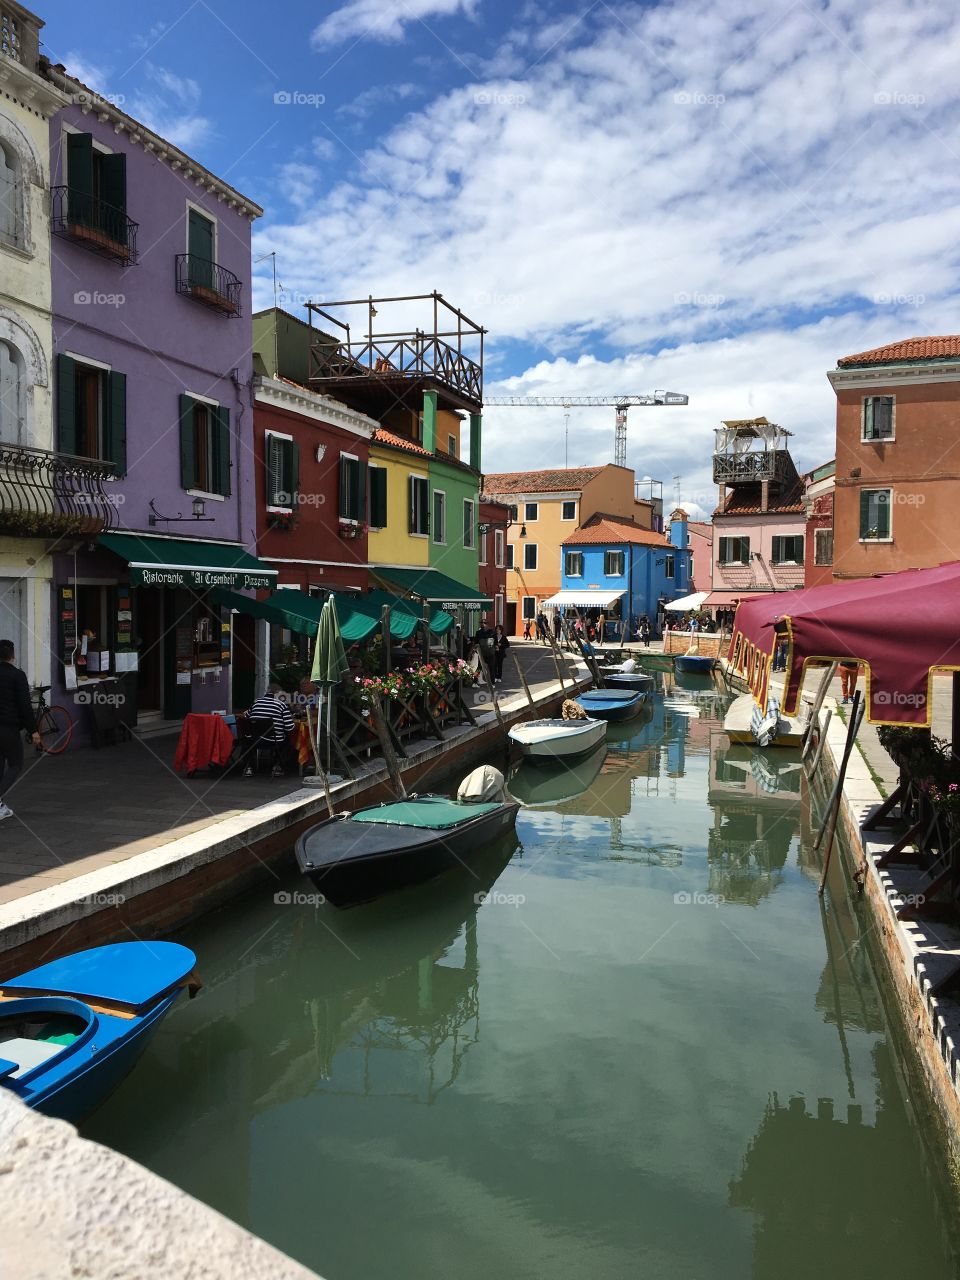 Canal, Water, Gondola, Travel, Boat